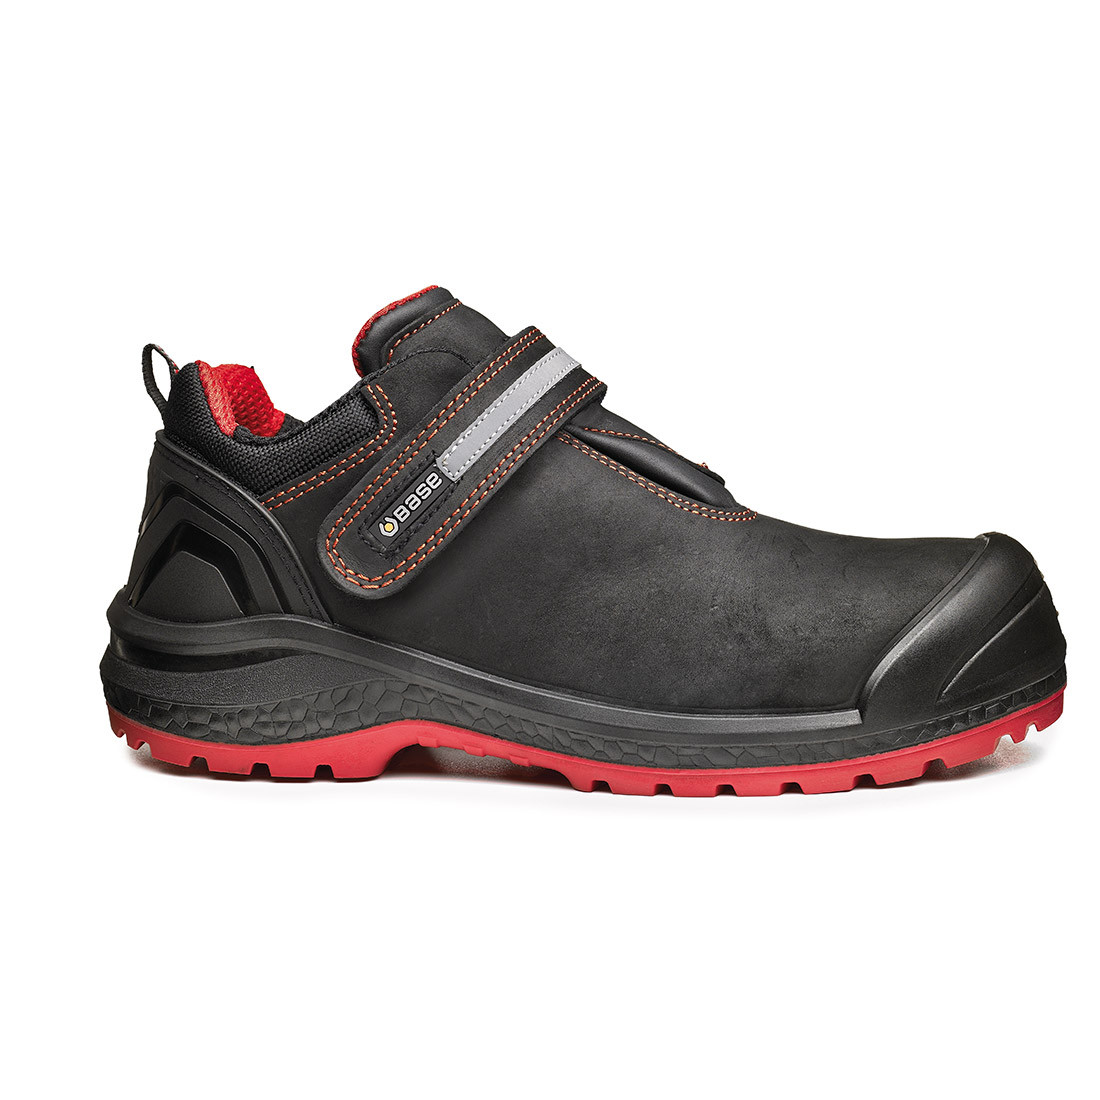 Pantofi Twinkle S3 HRO CI HI SRC - Incaltaminte de protectie | Bocanci, Pantofi, Sandale, Cizme